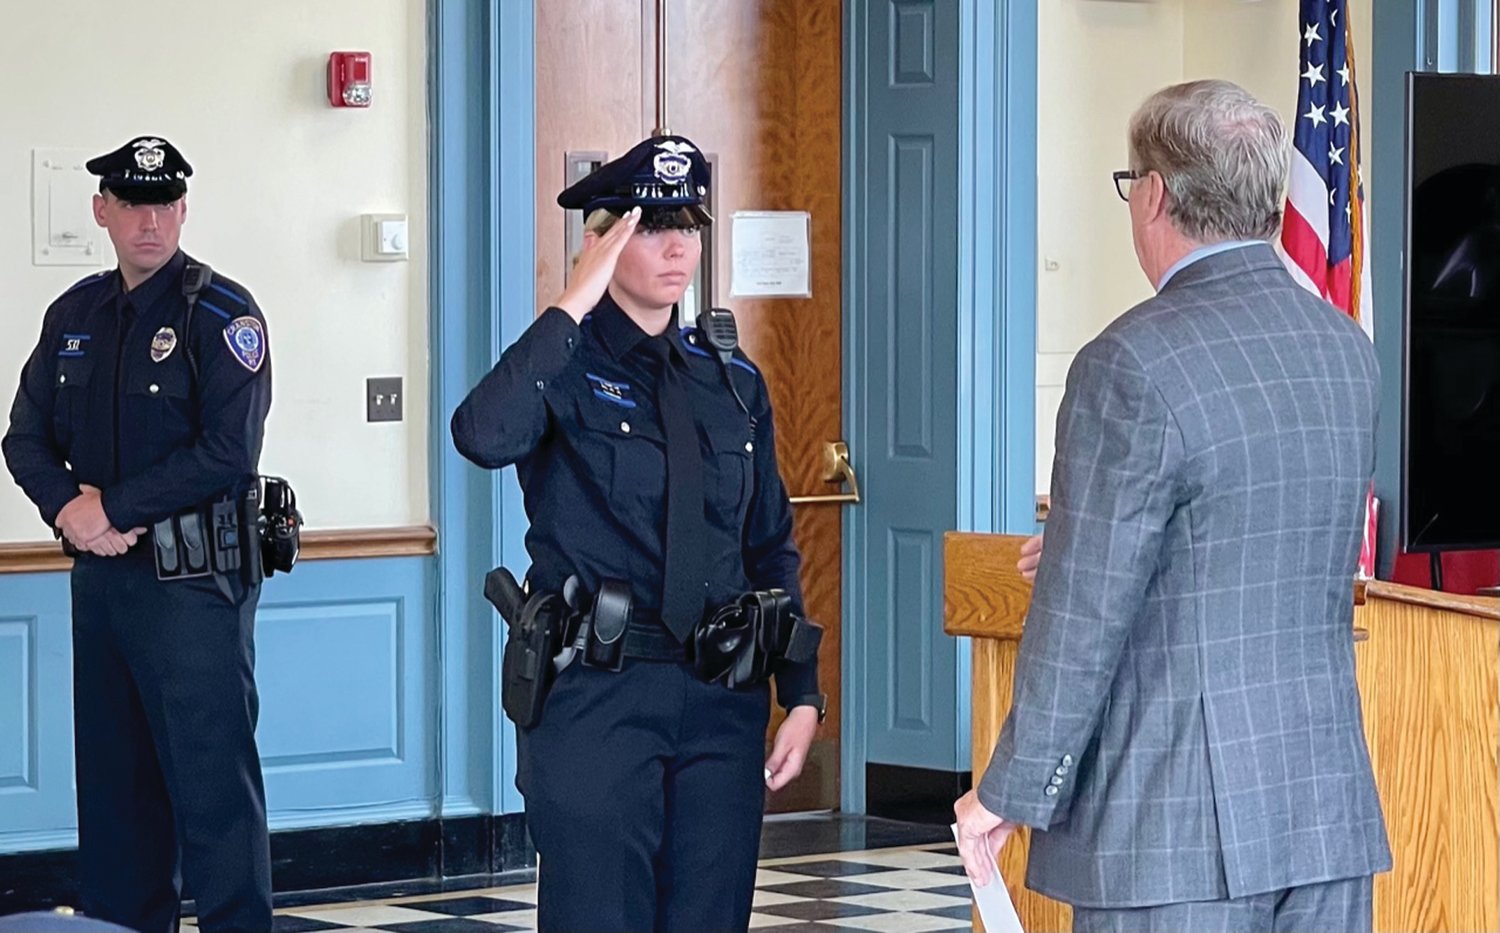 Officer Cooper being sworn in by Mayor Hopkins